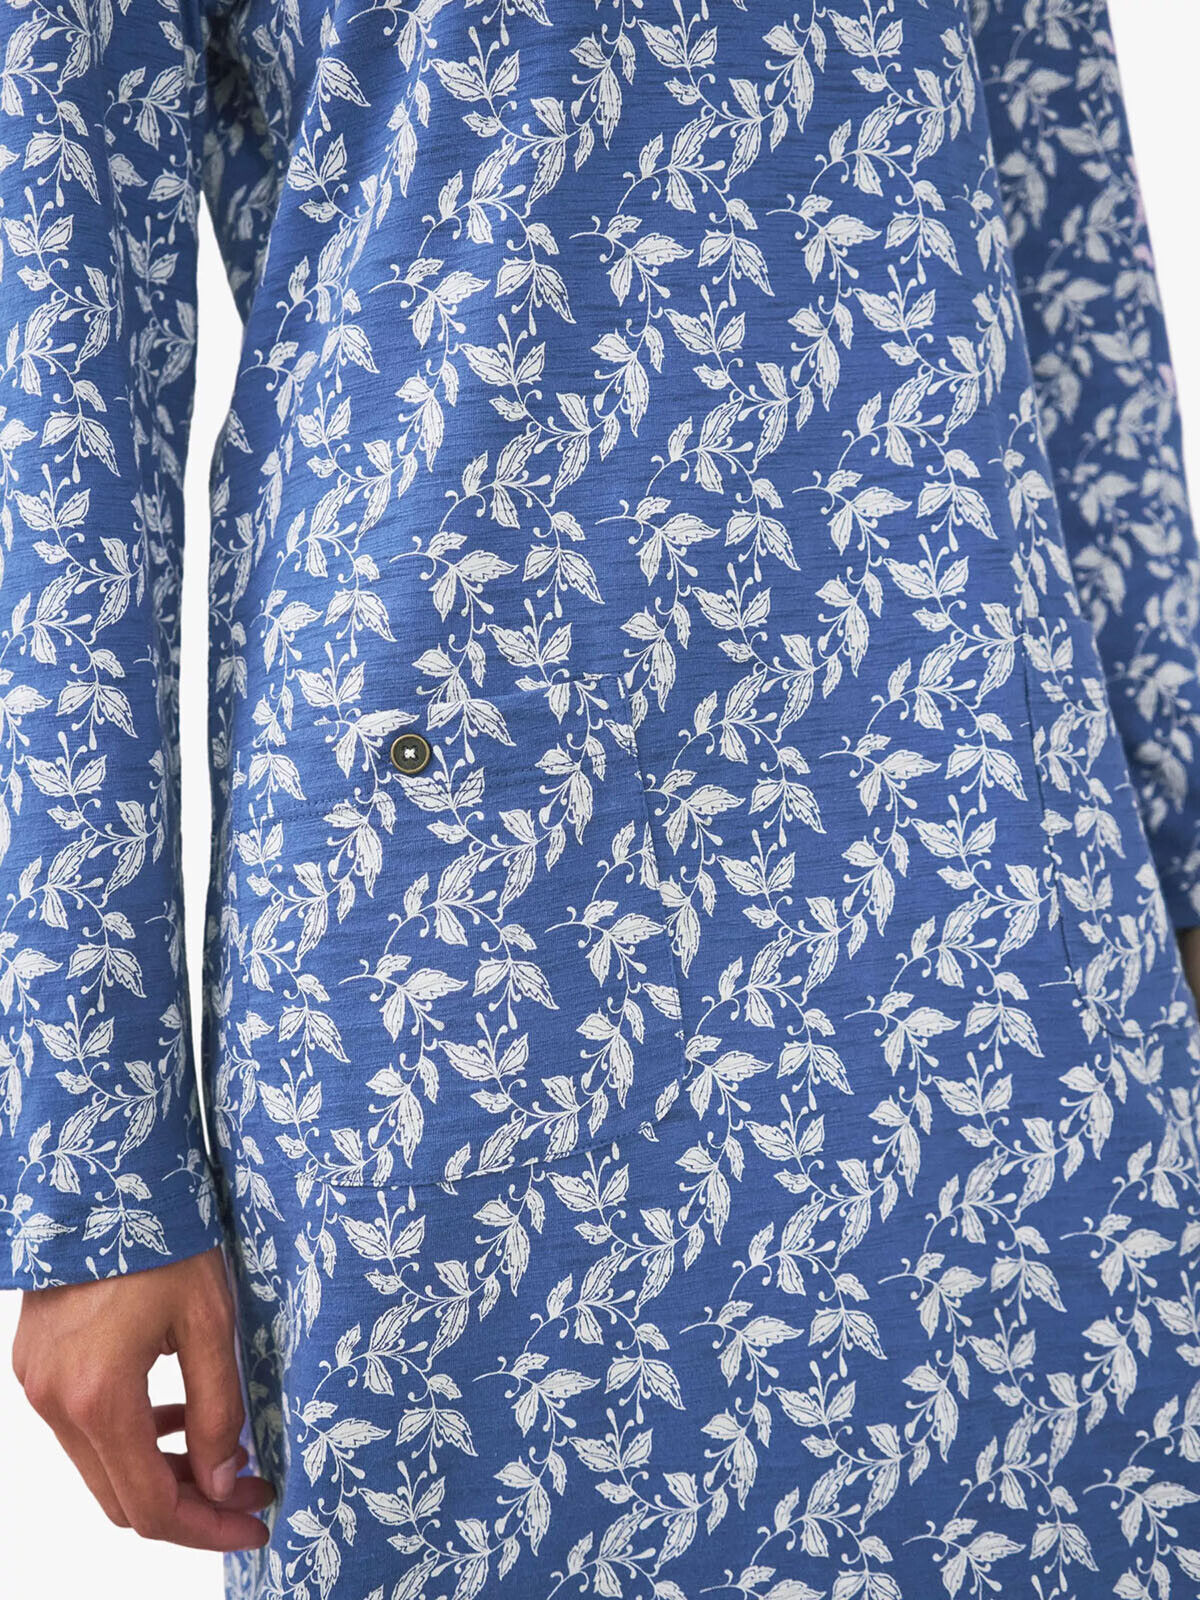 EX WHITE STUFF Blue Multi Bea Fairtrade Dress in Sizes 10, 12, 16, 20 RRP £55